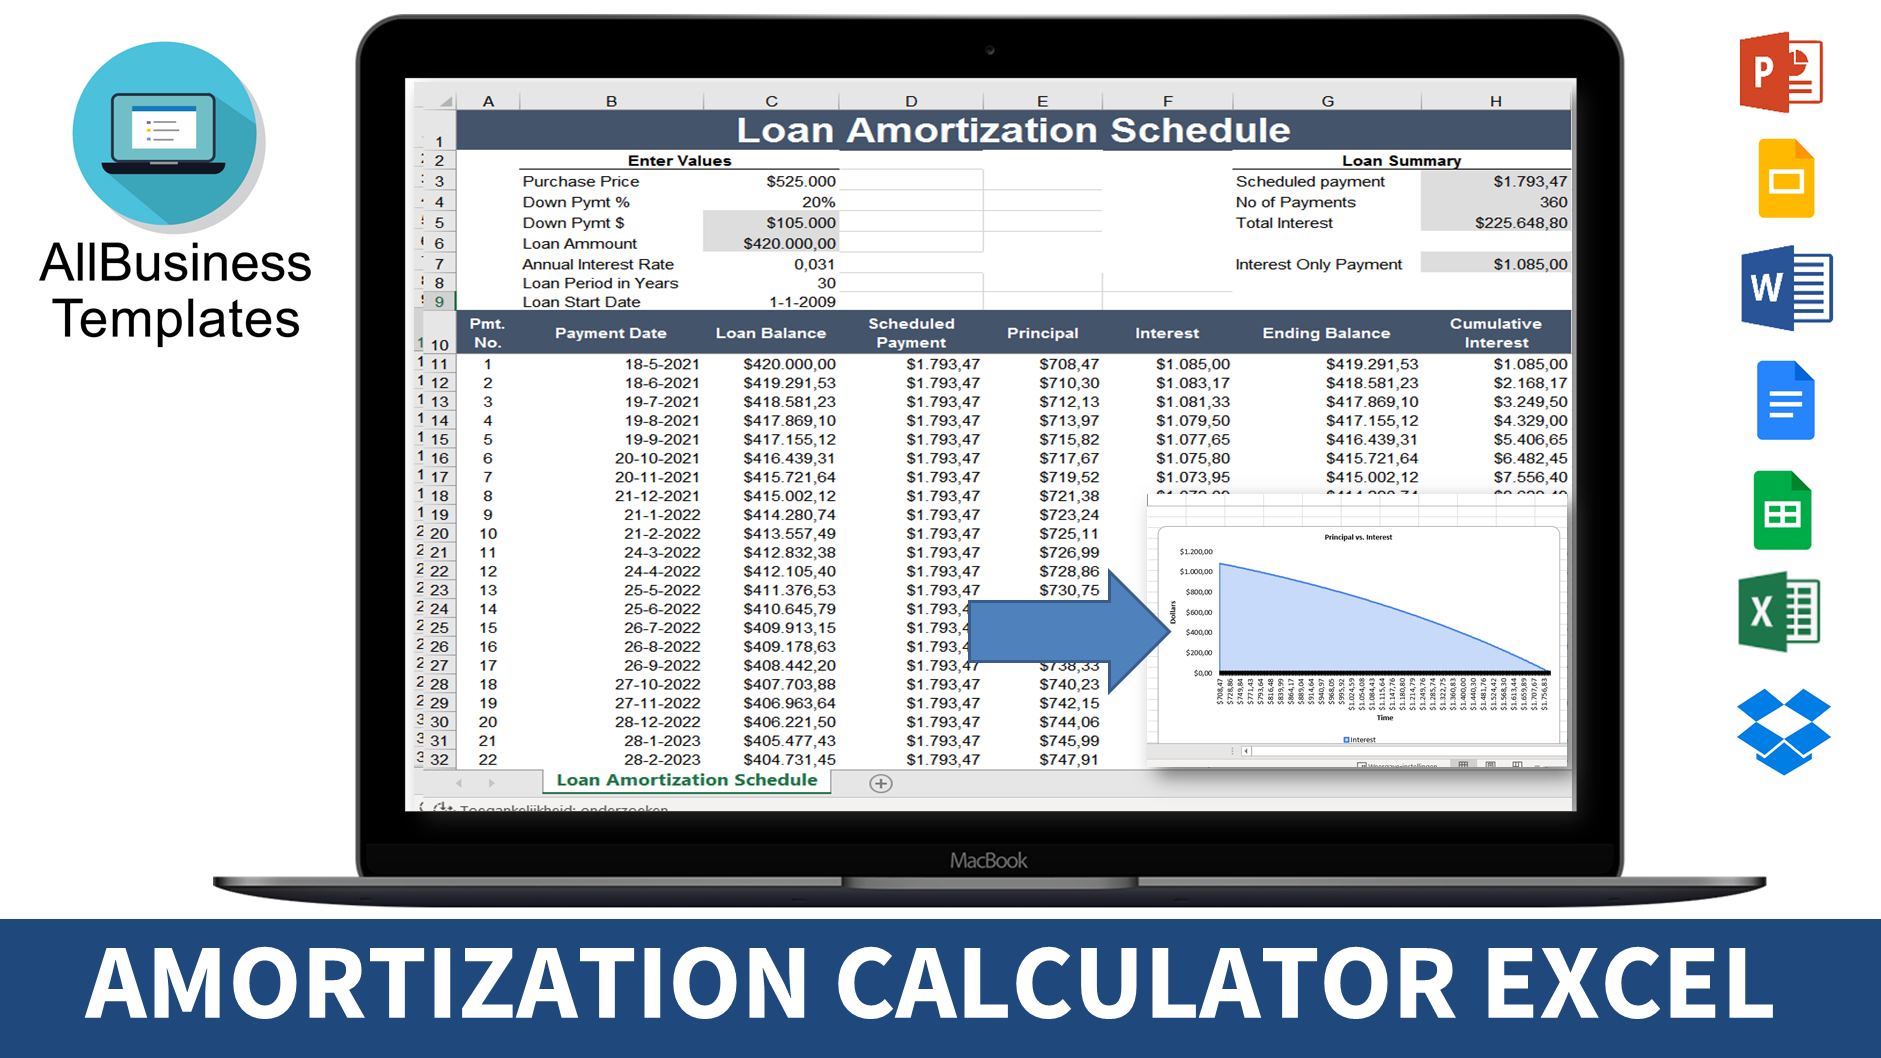 Amortization Calculator Excel Template main image